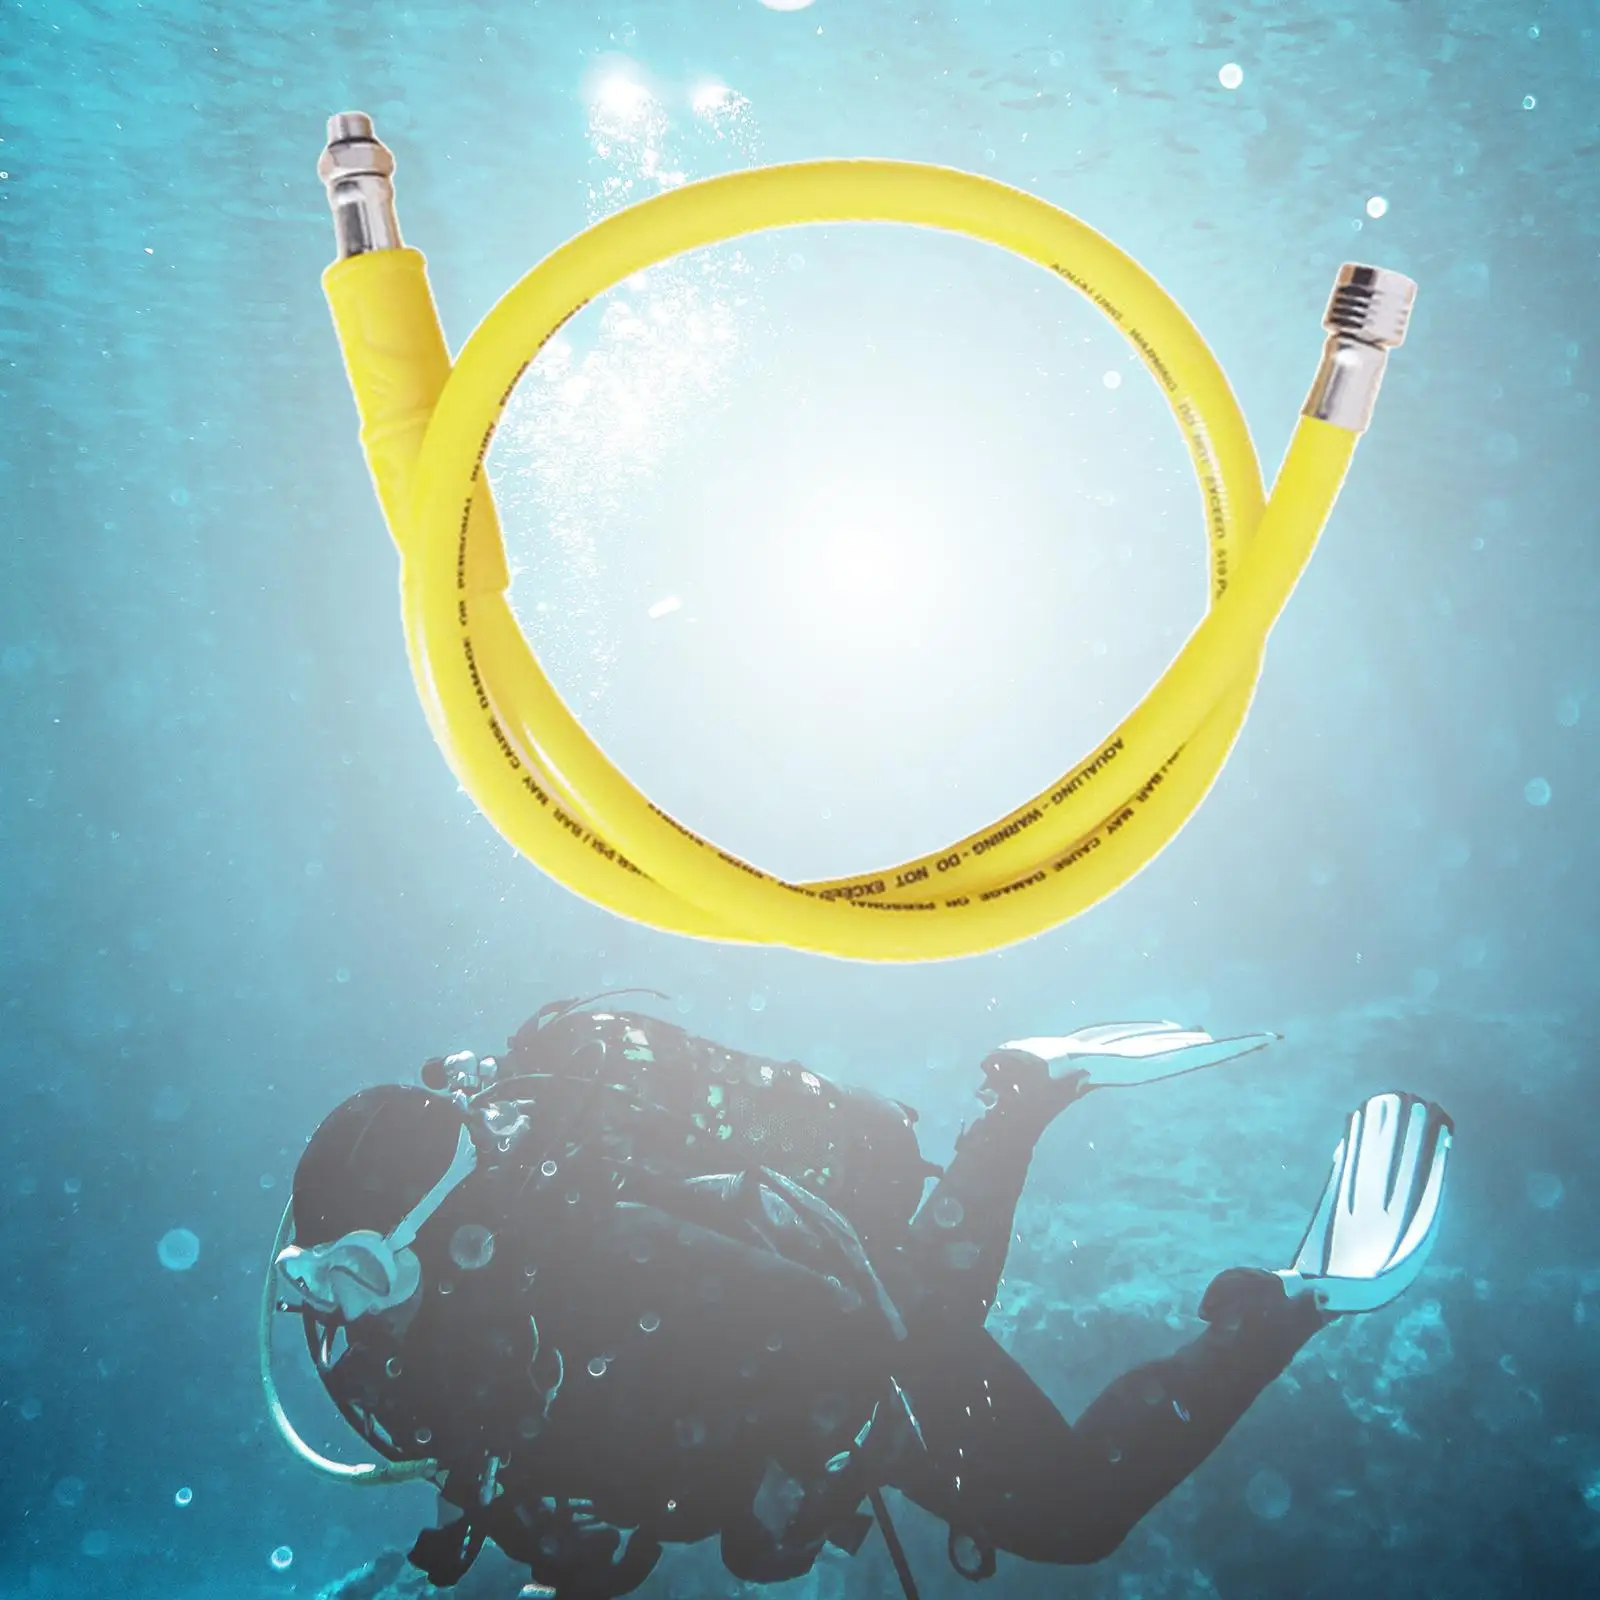 Submersible Medium Pressure Hose Diving Breathing Tube for Diving Equipment